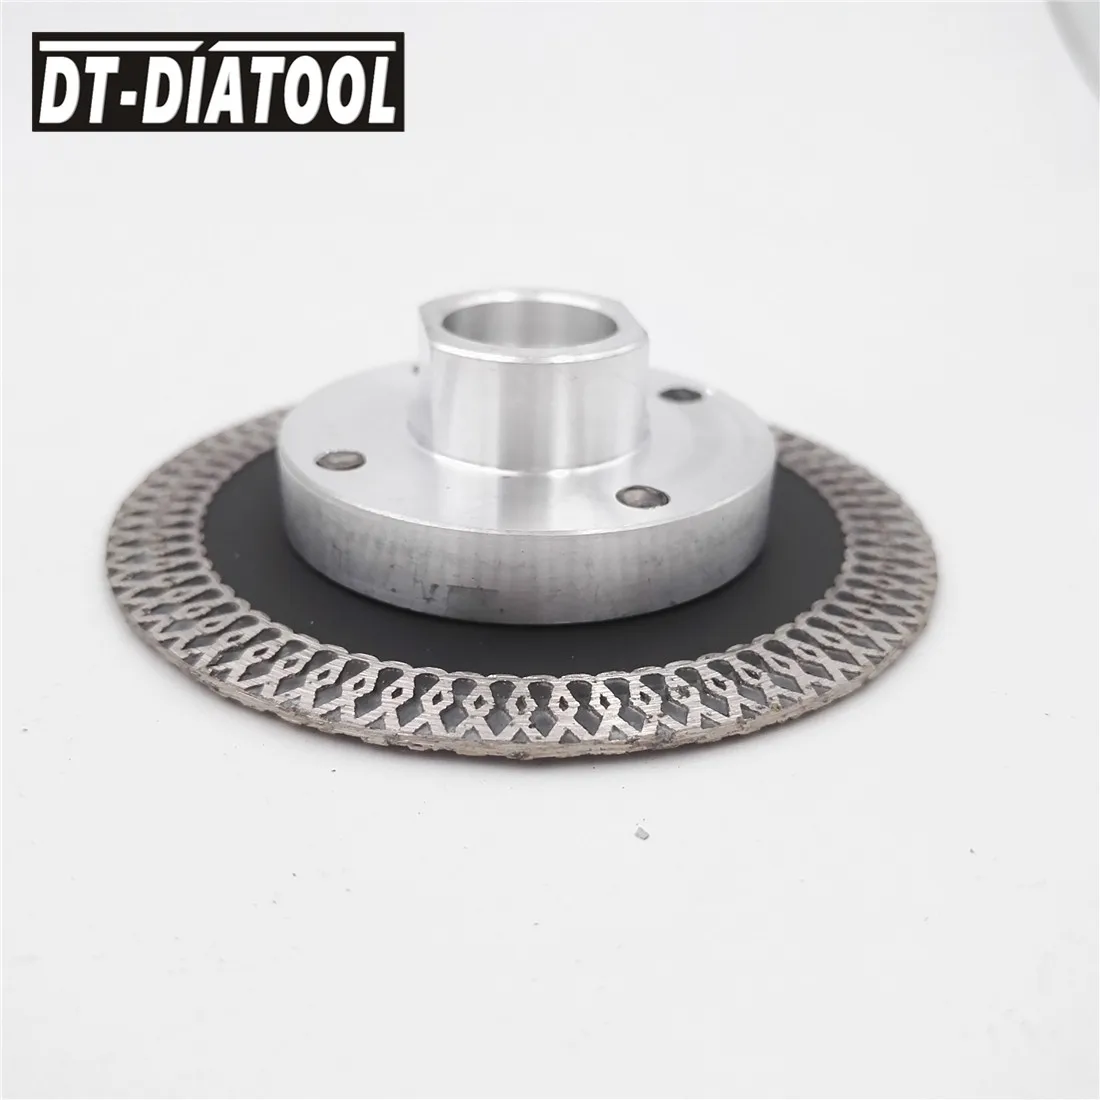 DT-DIATOOL 2 шт. 75 мм горячего прессования сетки turbo алмазной пилы 1 шт. съемный M14 фланец для резки резьба диск для камня мрамор от AliExpress WW